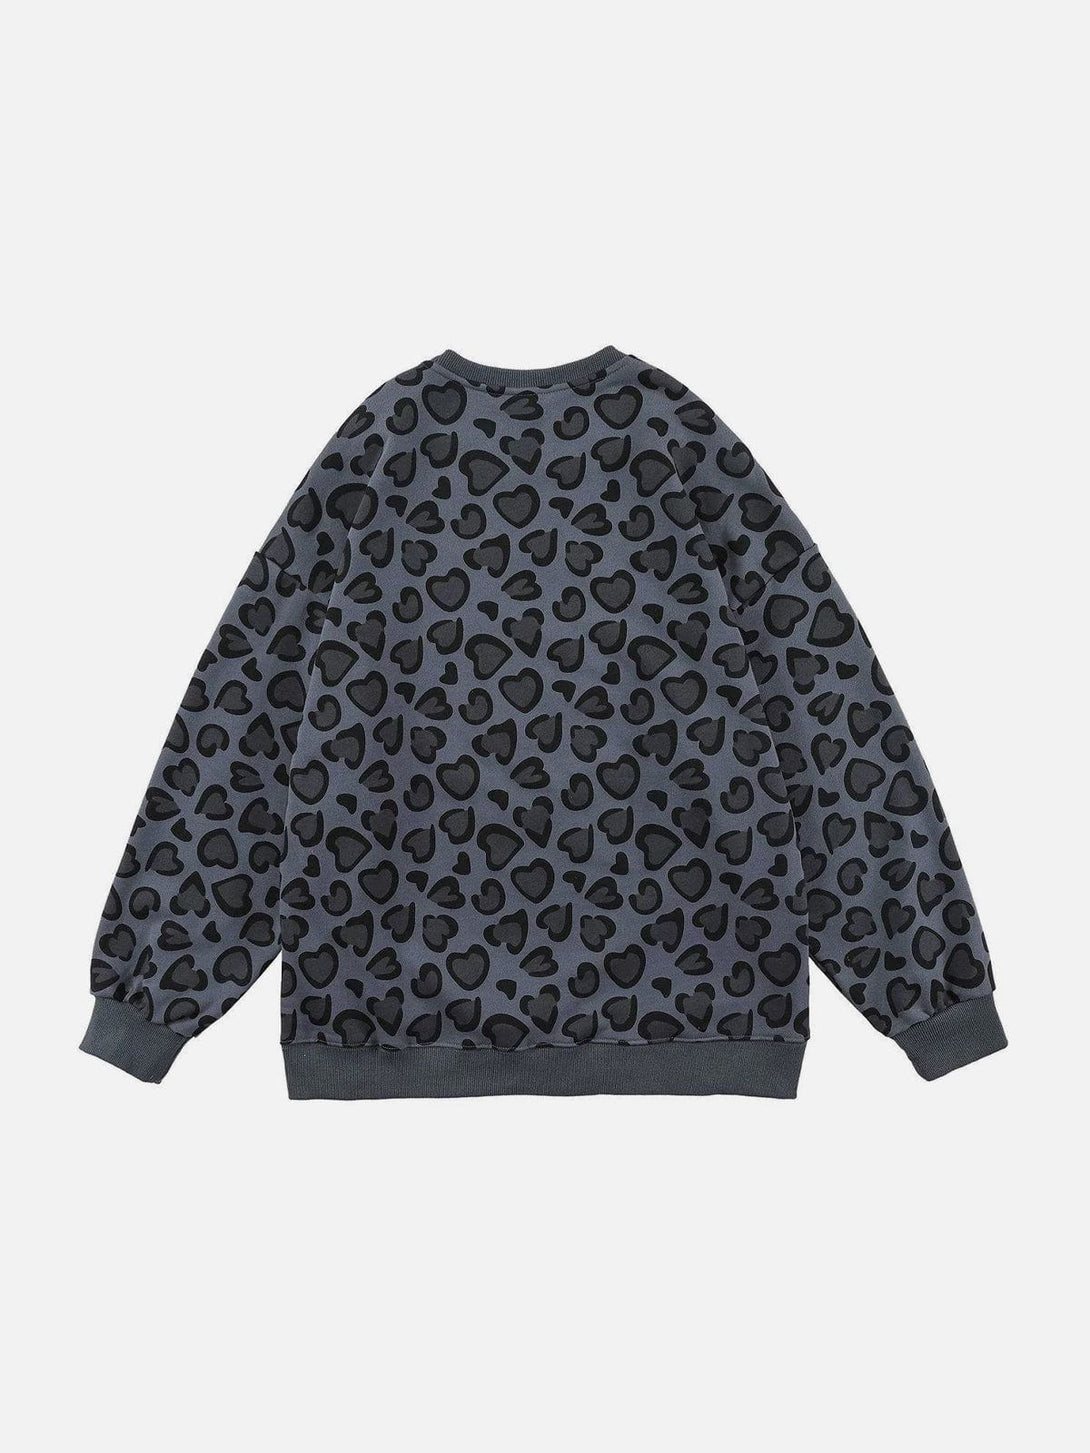 Majesda® - Letter Graphic Sweatshirt outfit ideas streetwear fashion